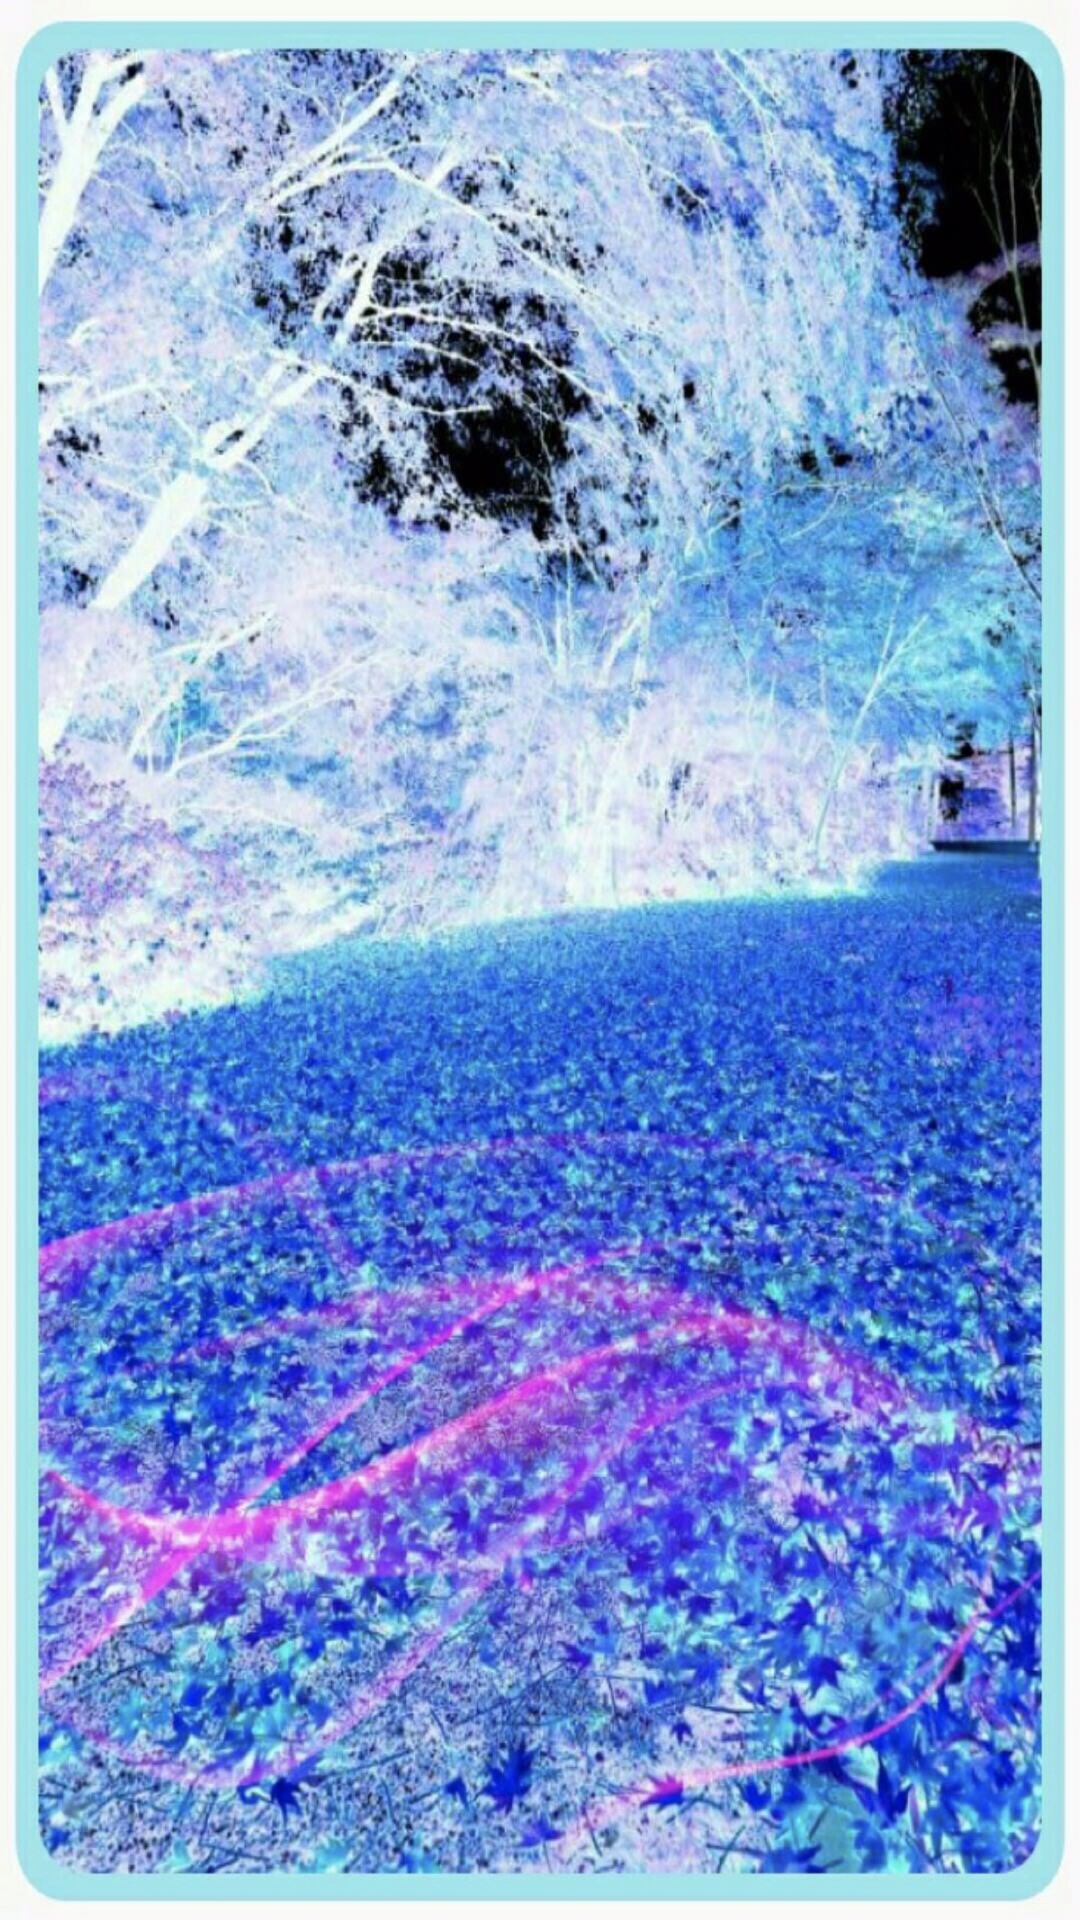  Hutan  biru  wallpaper sc iPhone7Plus